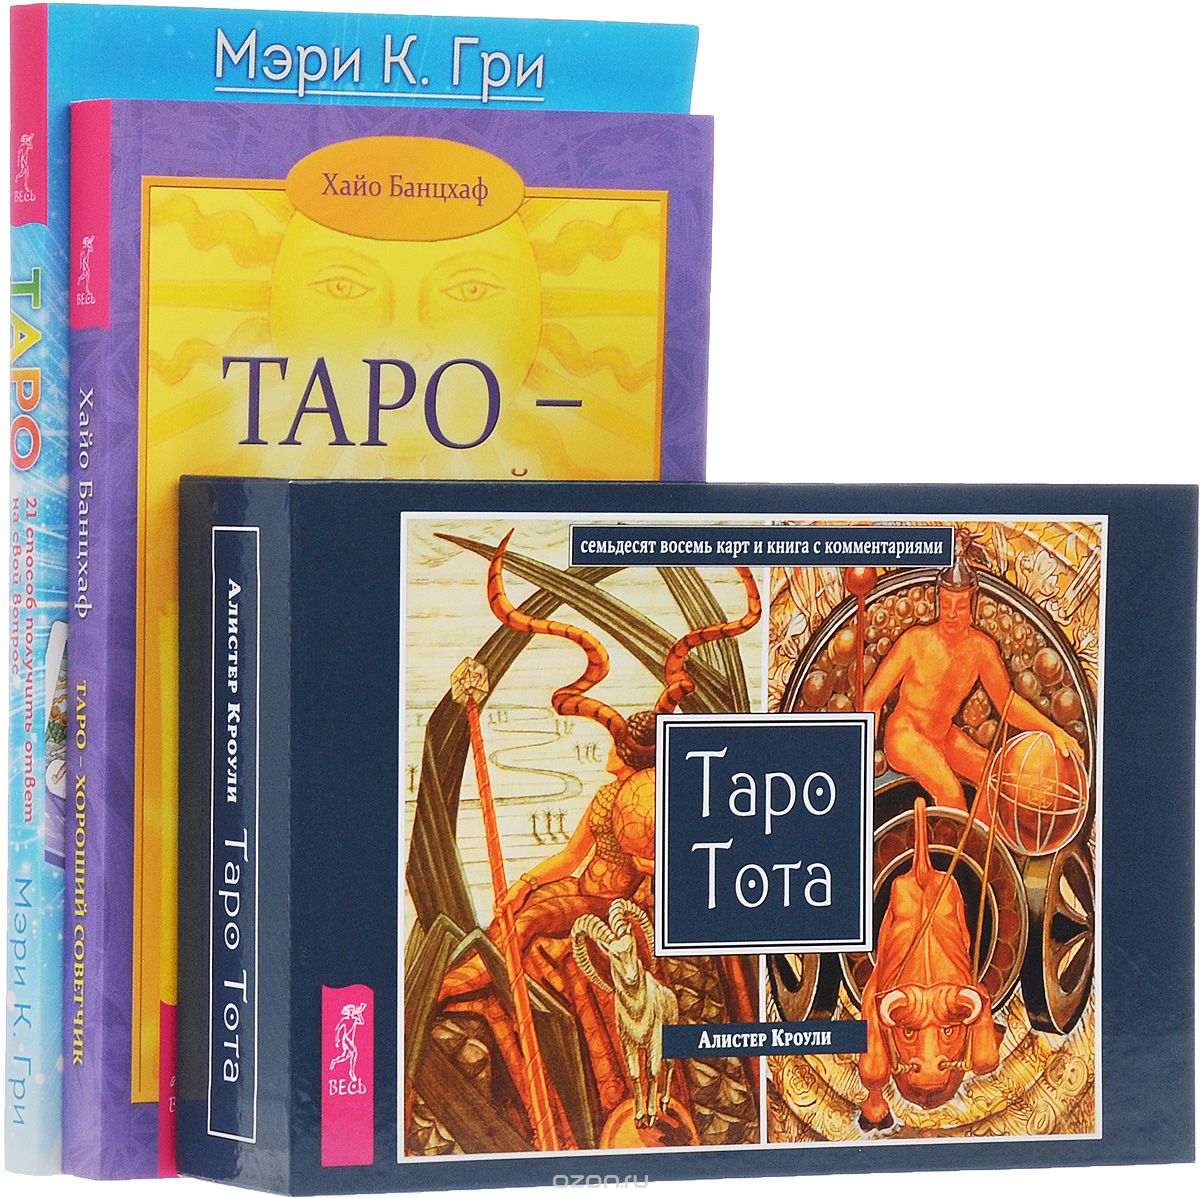 Таро. Таро - хороший советчик (комплект из 2 книг + набор из 78 карт), Мэри К. Гри, Хайо Банцхаф